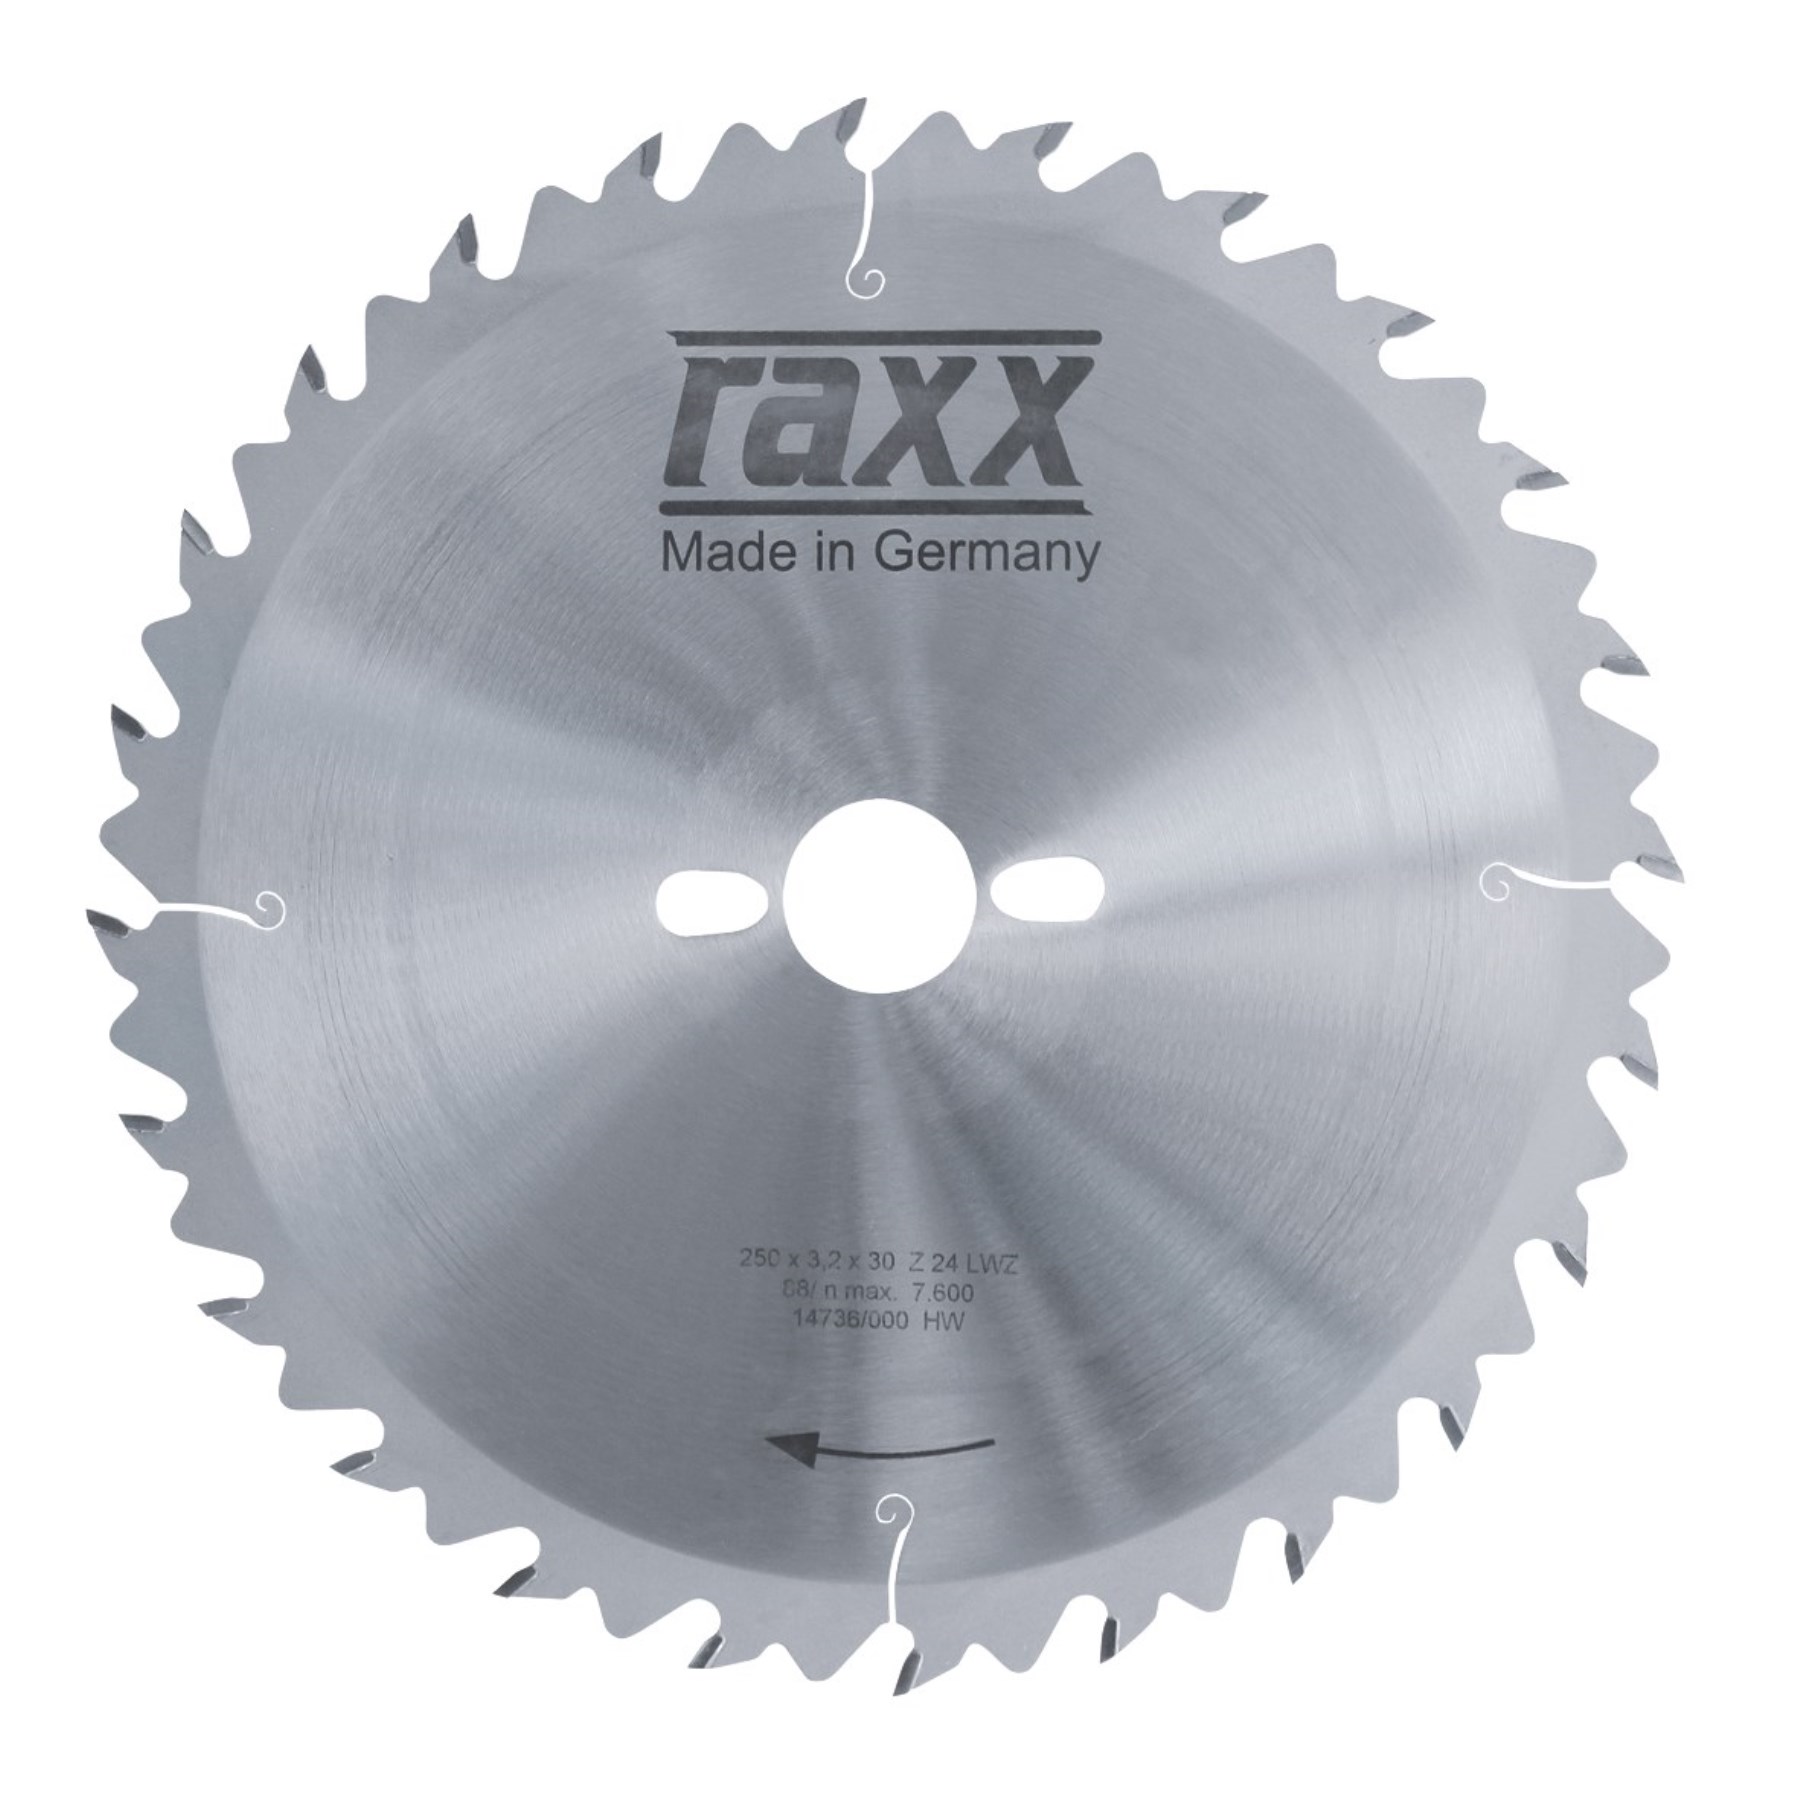 RAXX 1205066 kotouč k okružní pile HM 450x3,8x30 [ 42450300400060400 ]